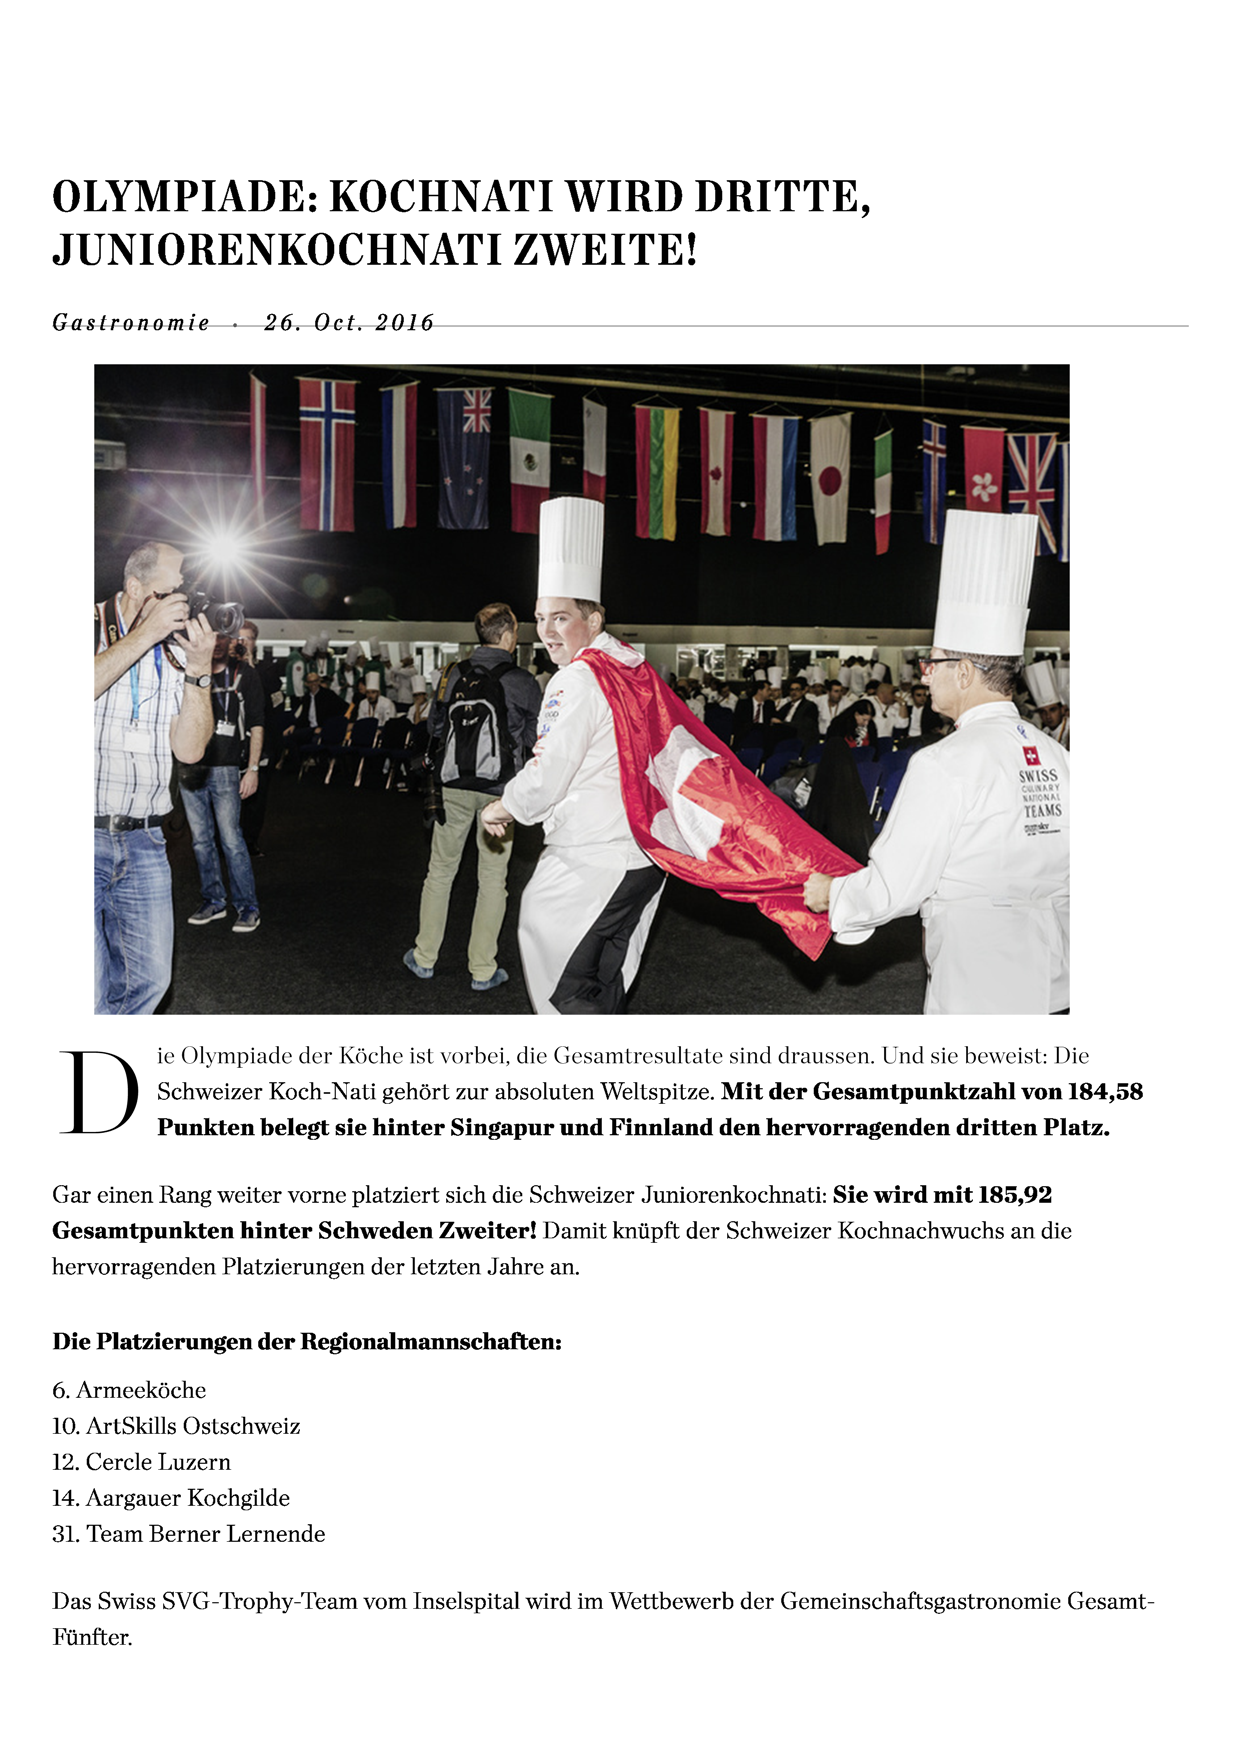 Olympiade - Artikel "Hotellerie Gastro Zeitung"